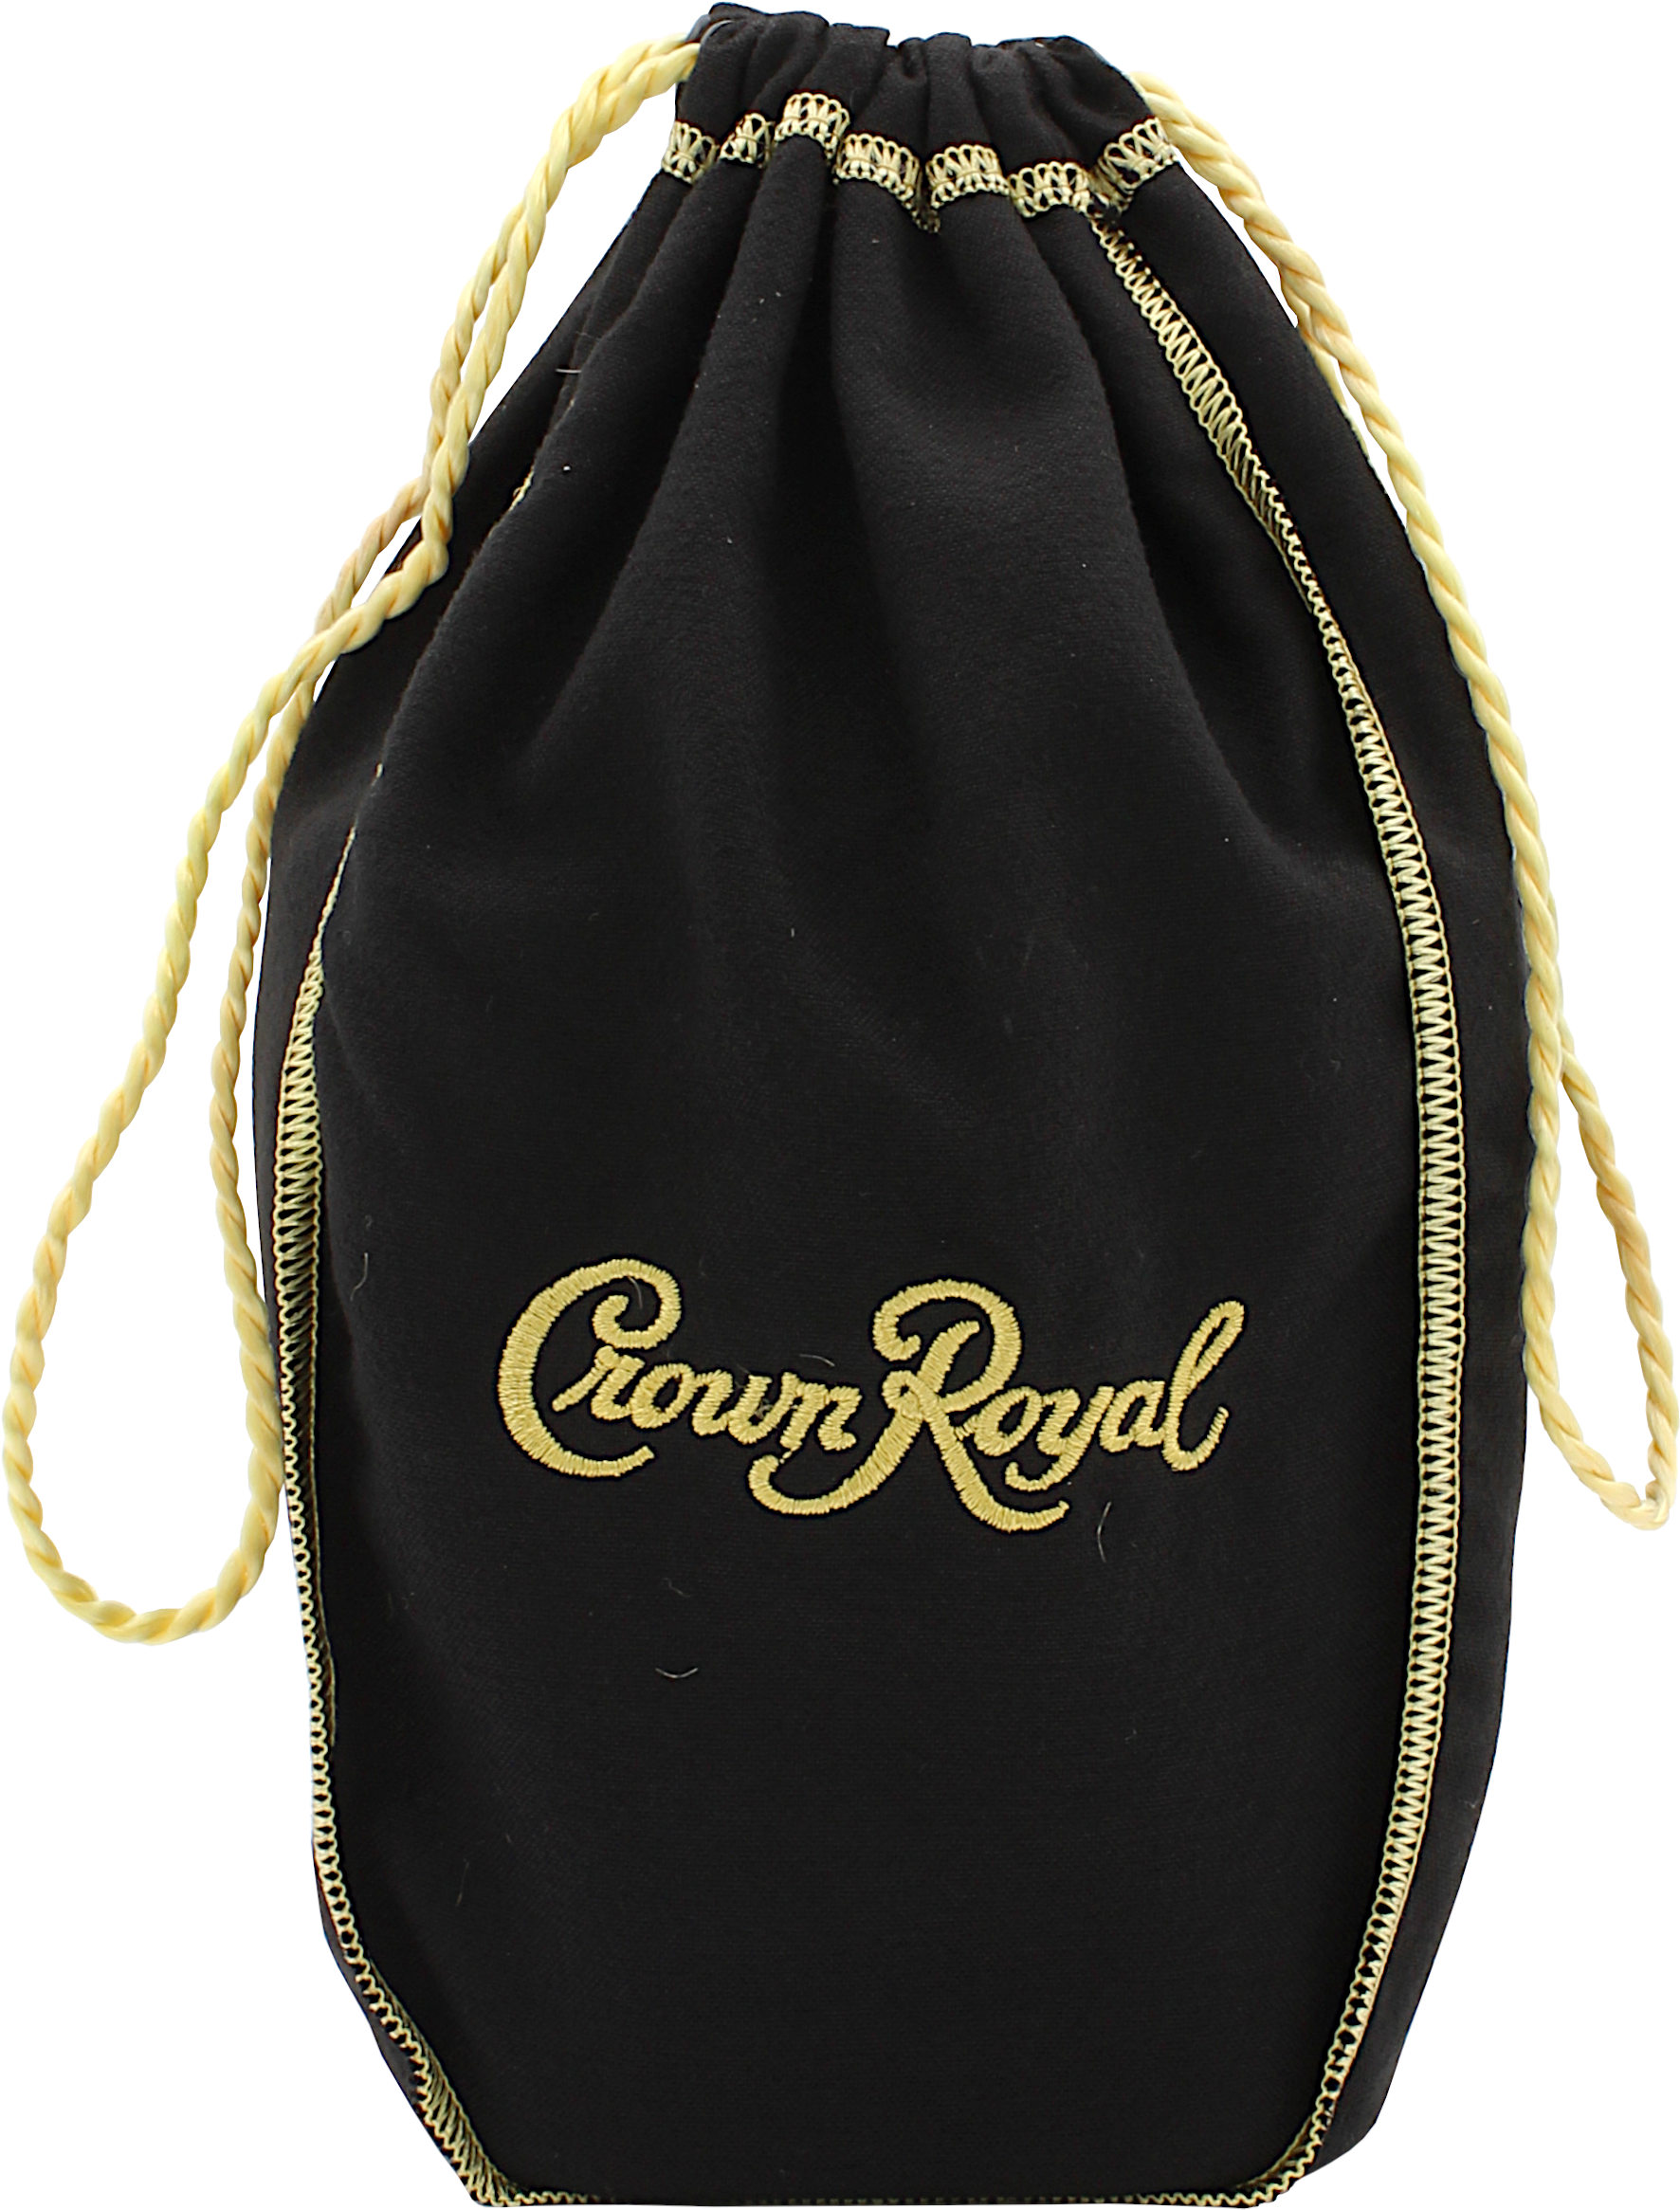 Crown Royal Black 45.0% 1 Liter